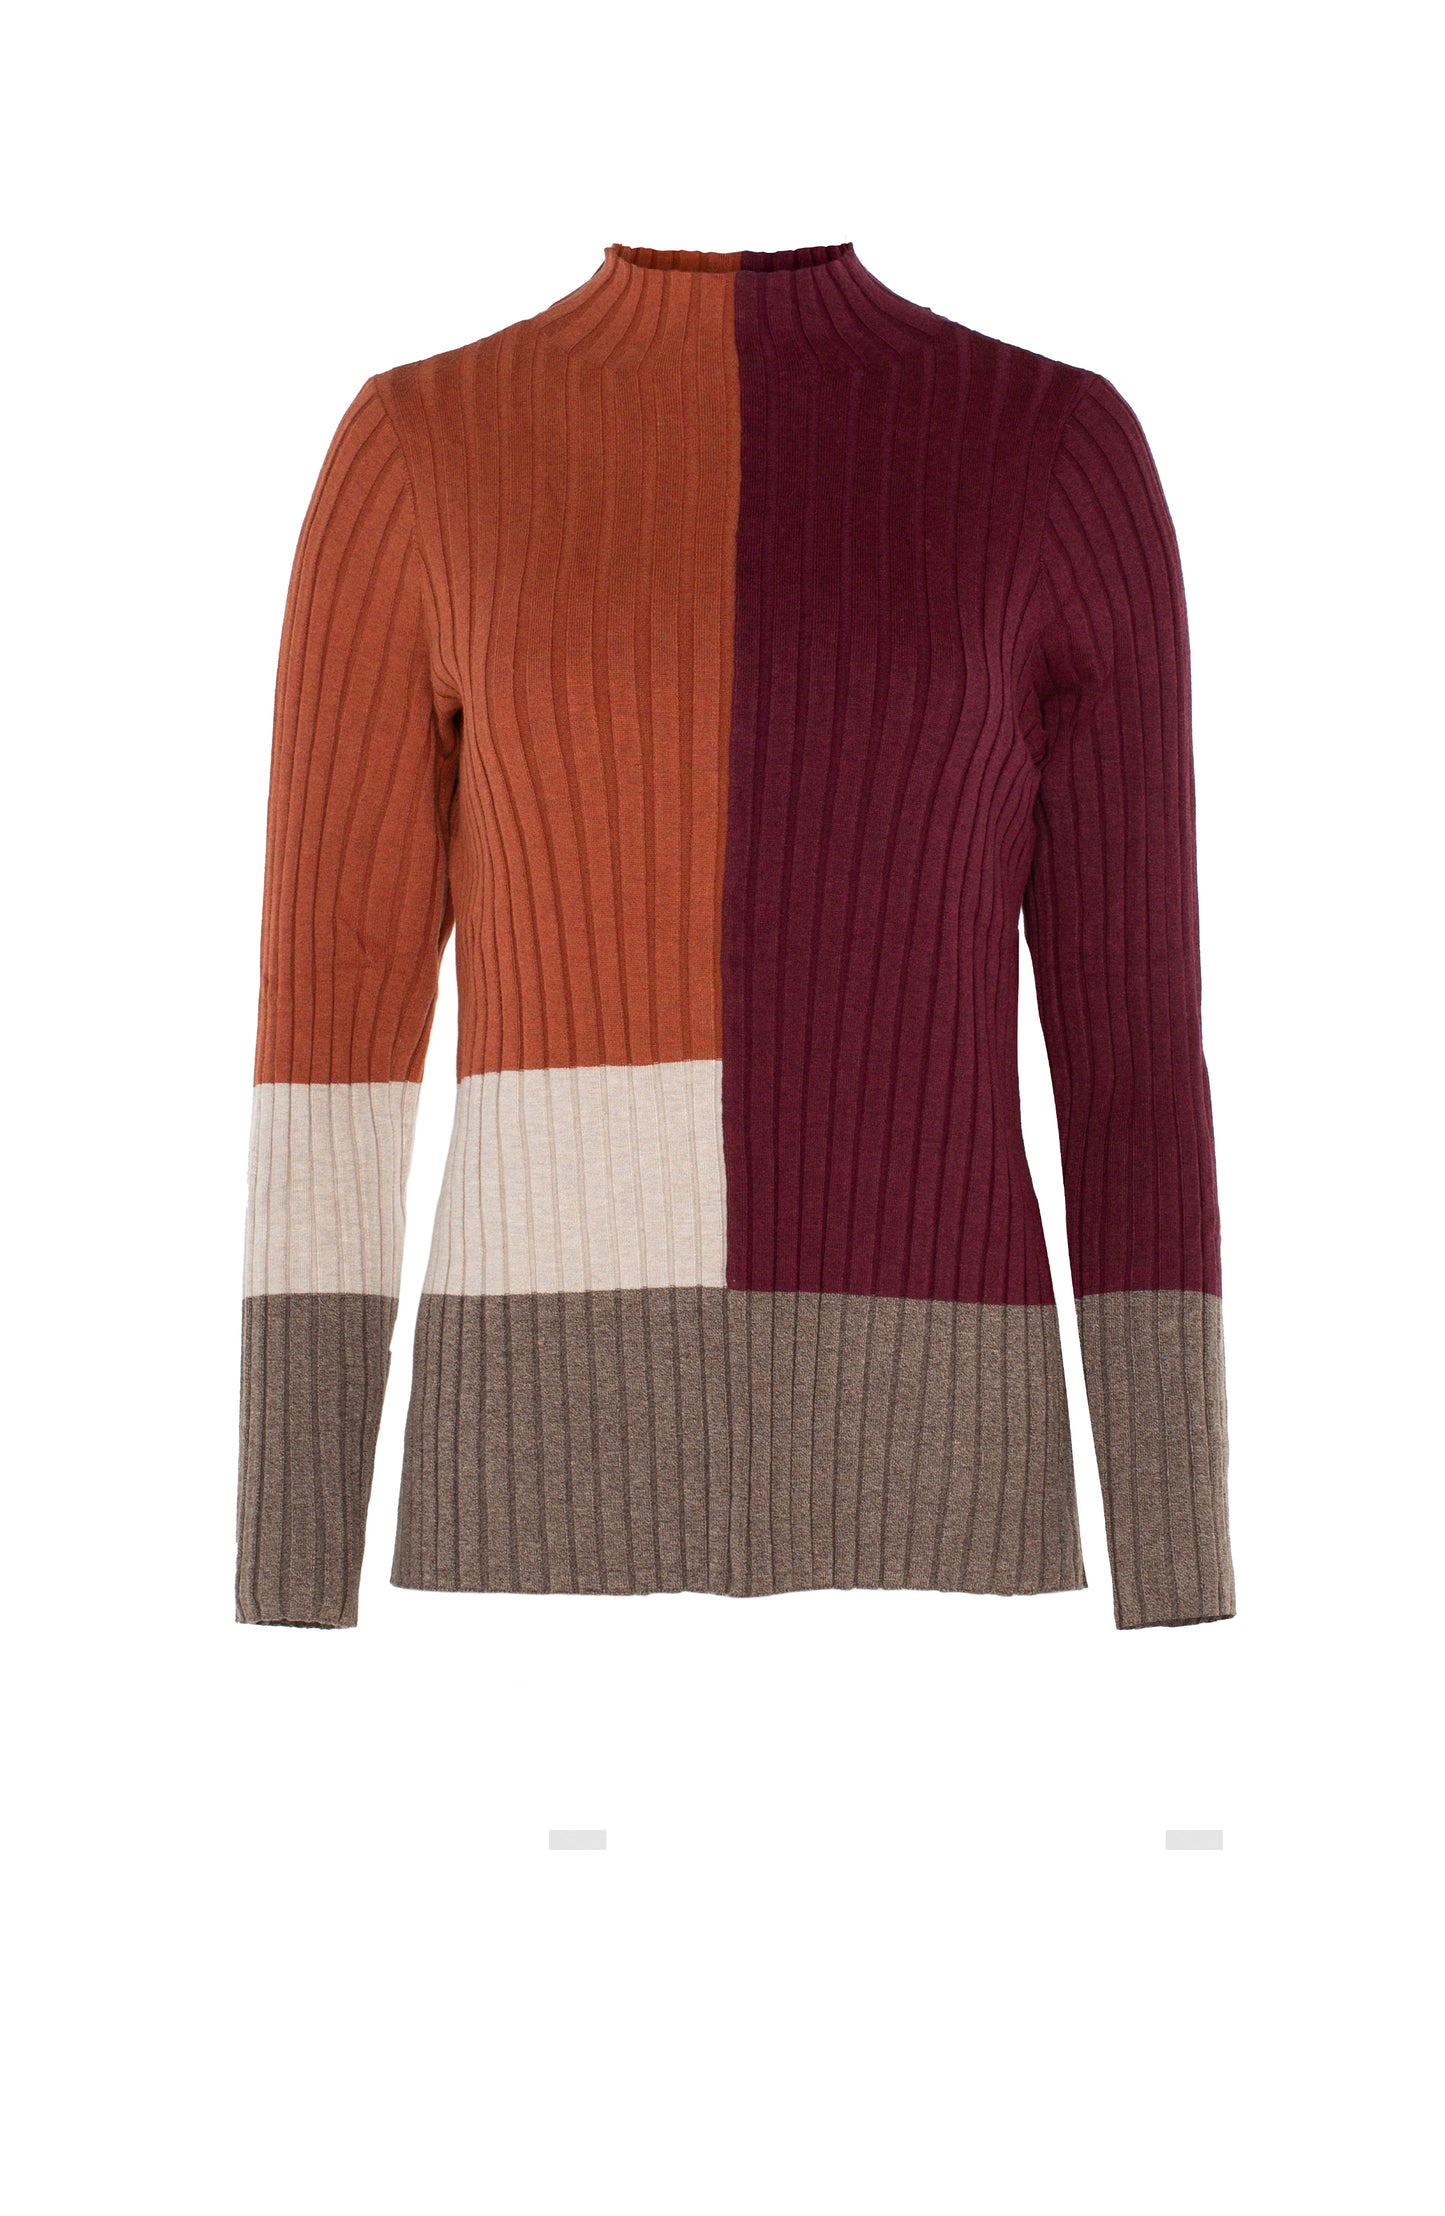 Liverpool Mock Neck Pullover Sweater w/Colorblock (Burgundy/Rust Colorblock)